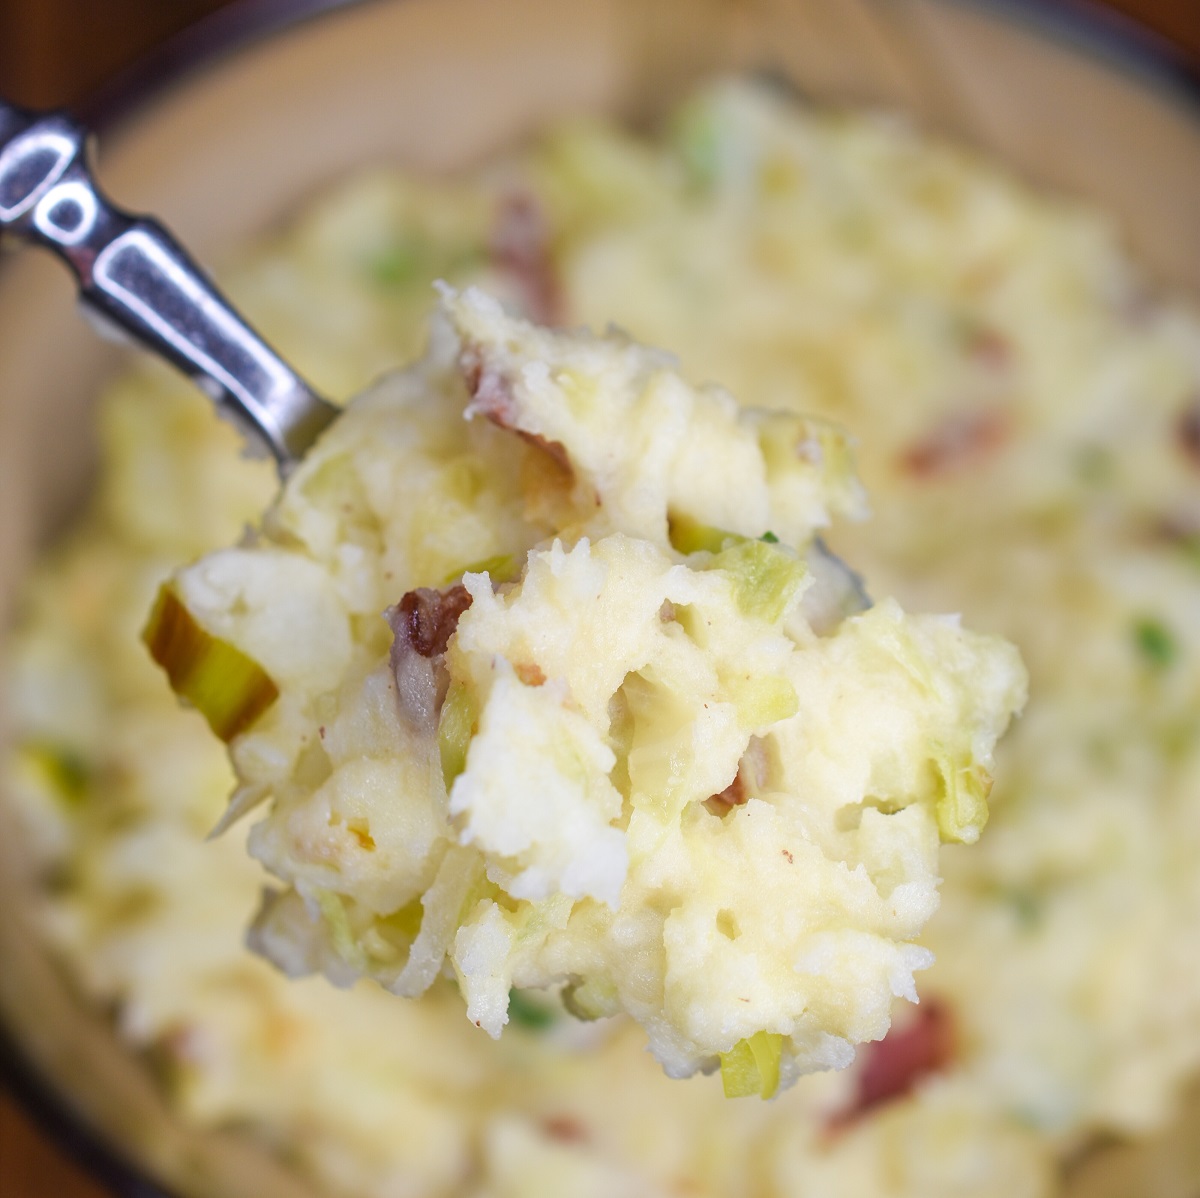 Colcannon recipe
Irish Mashed Potatoes